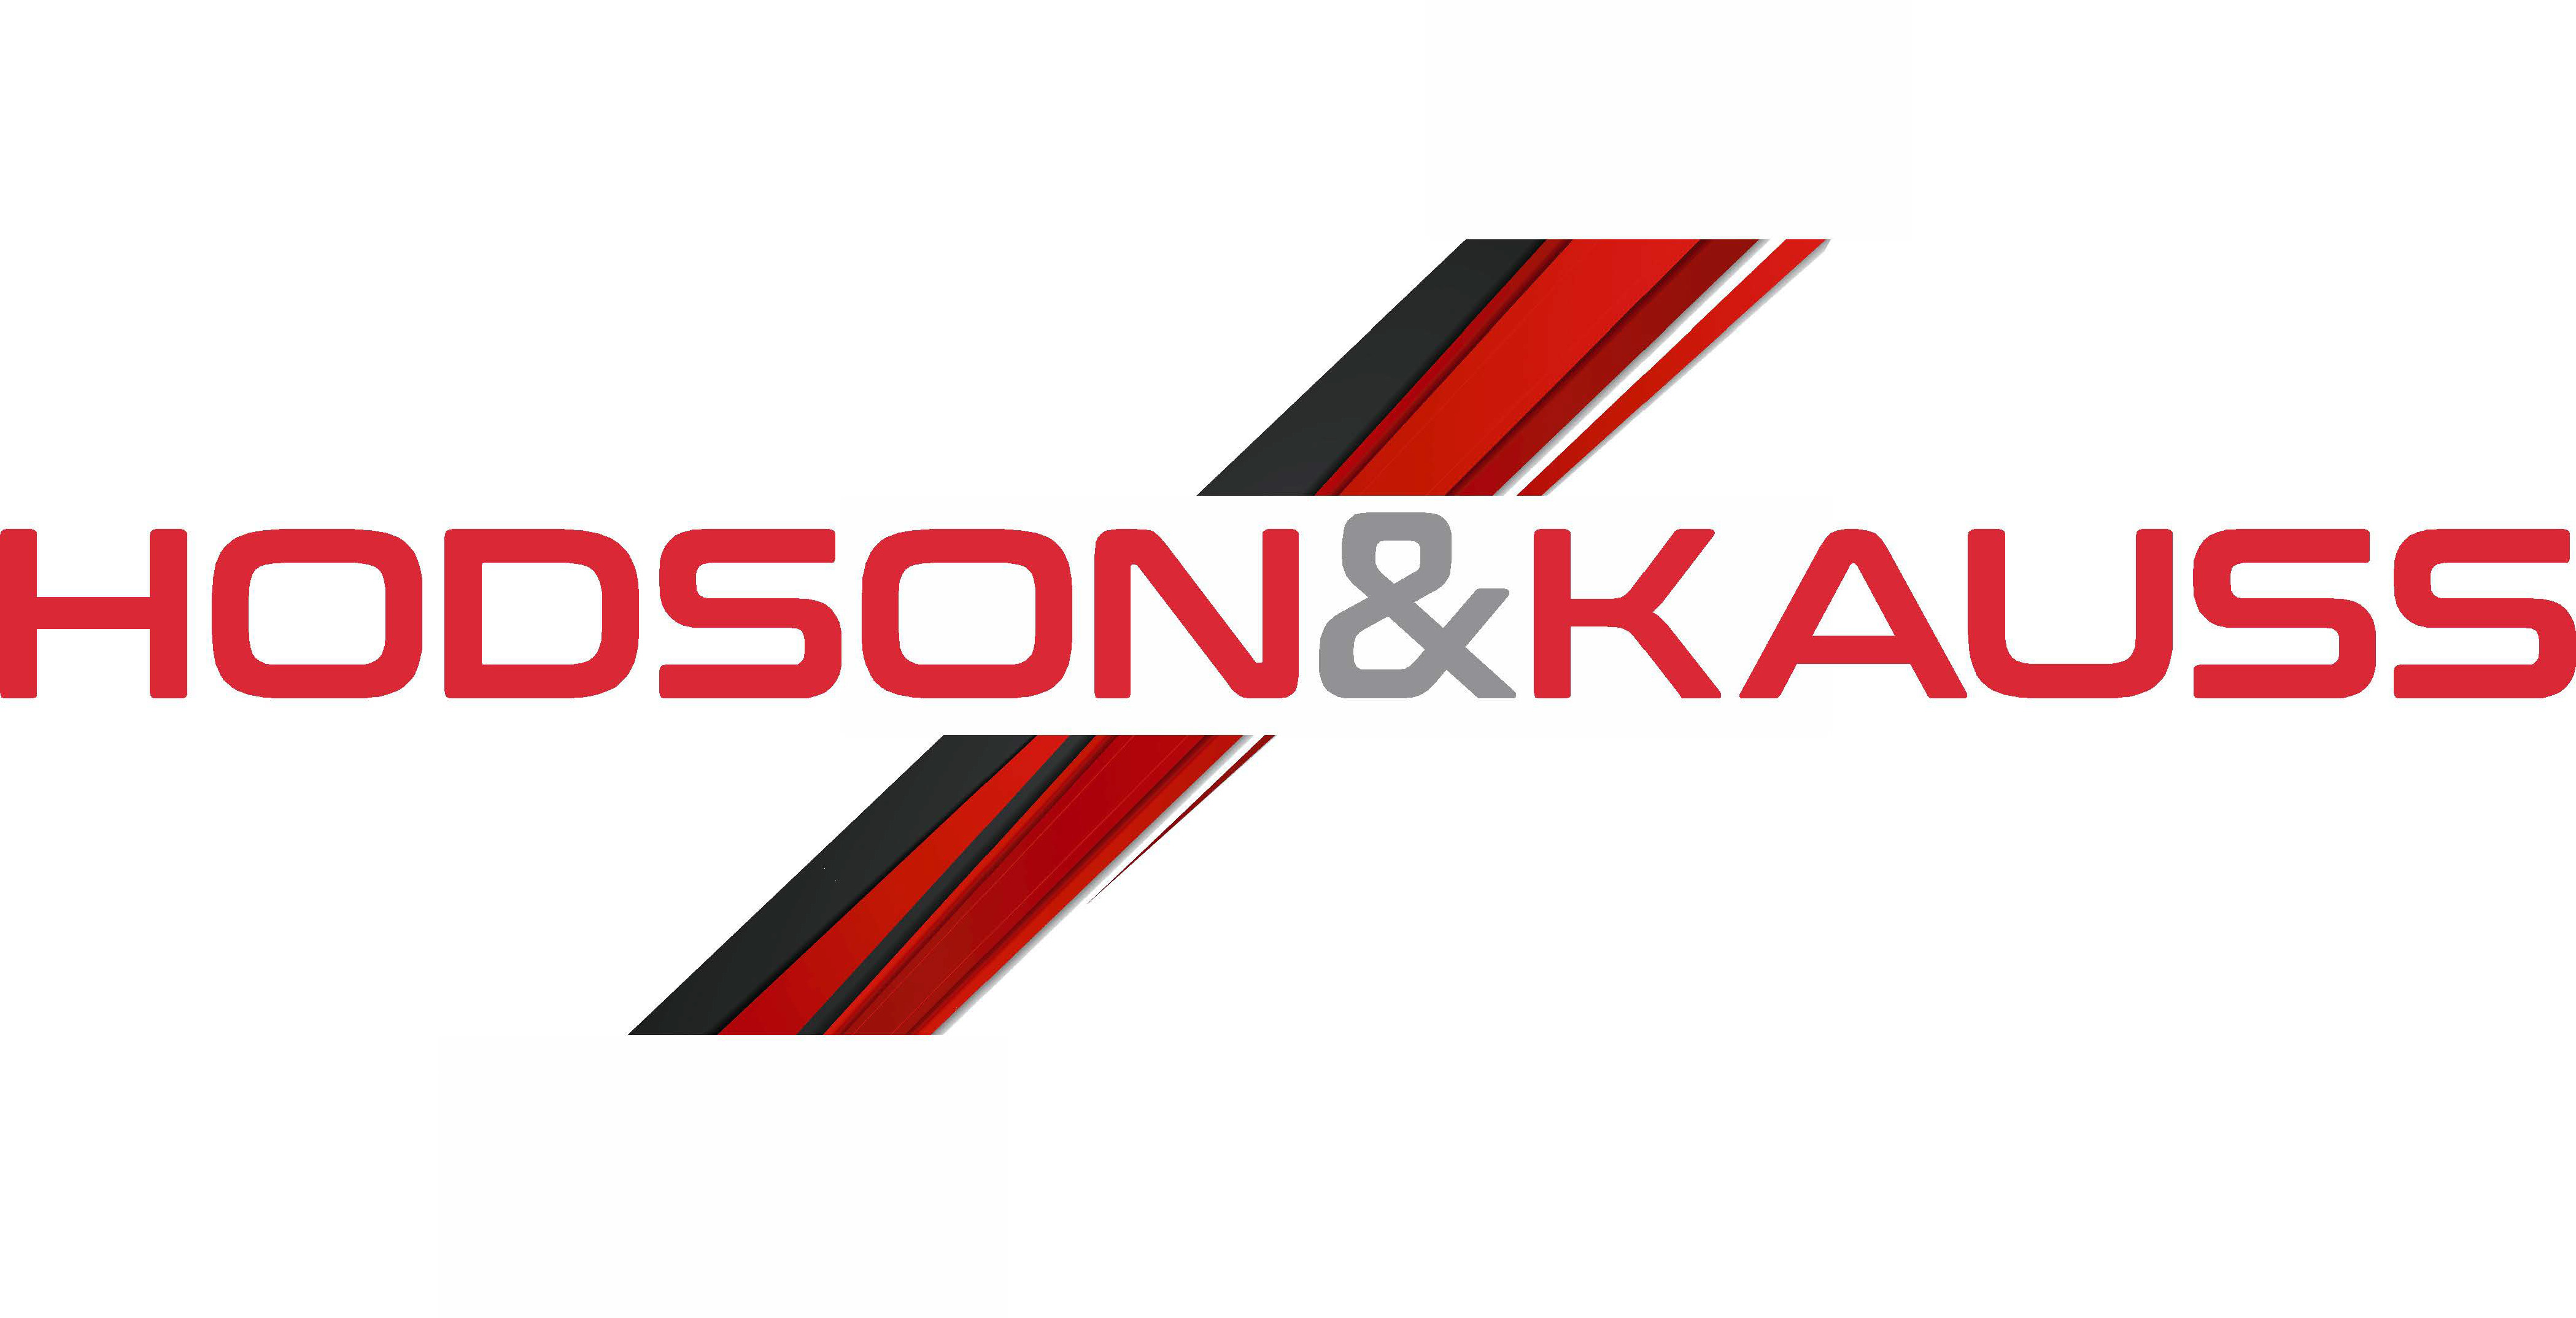 Hodson & Kauss Logo